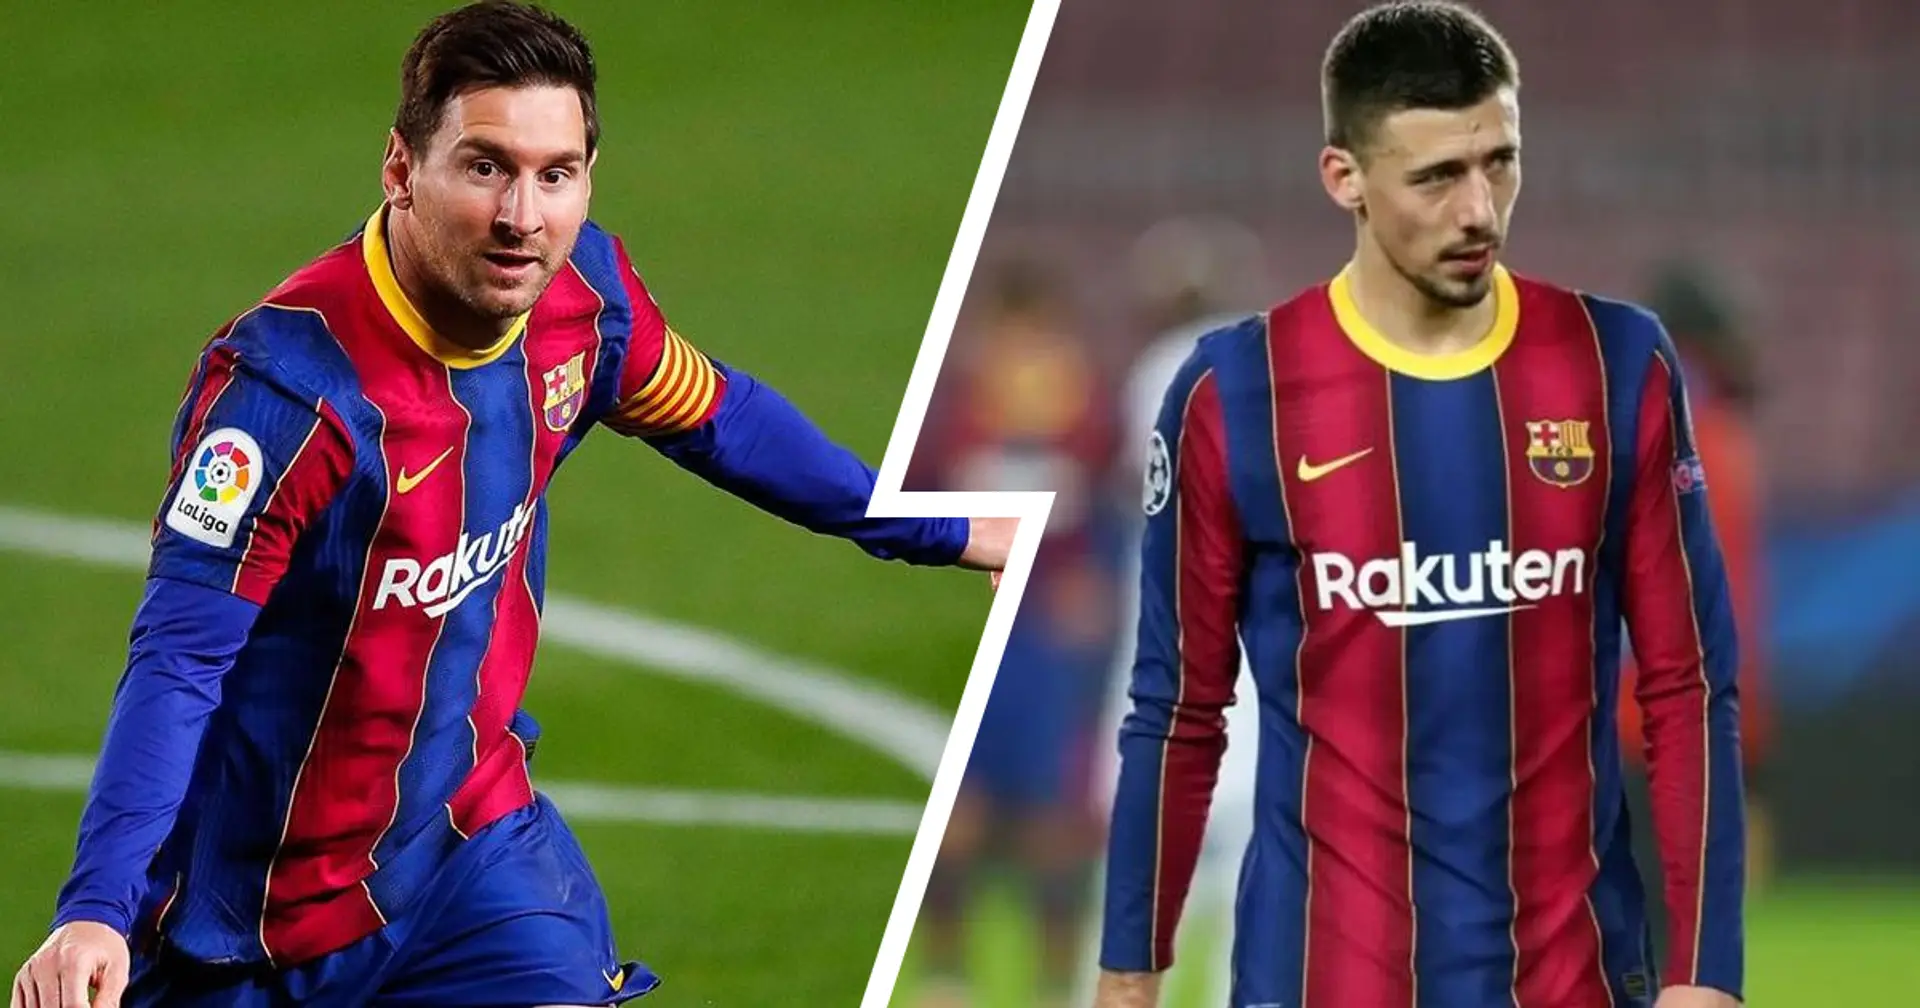 Messi 10, Lenglet 3: notas de los jugadores del Barça vs Getafe